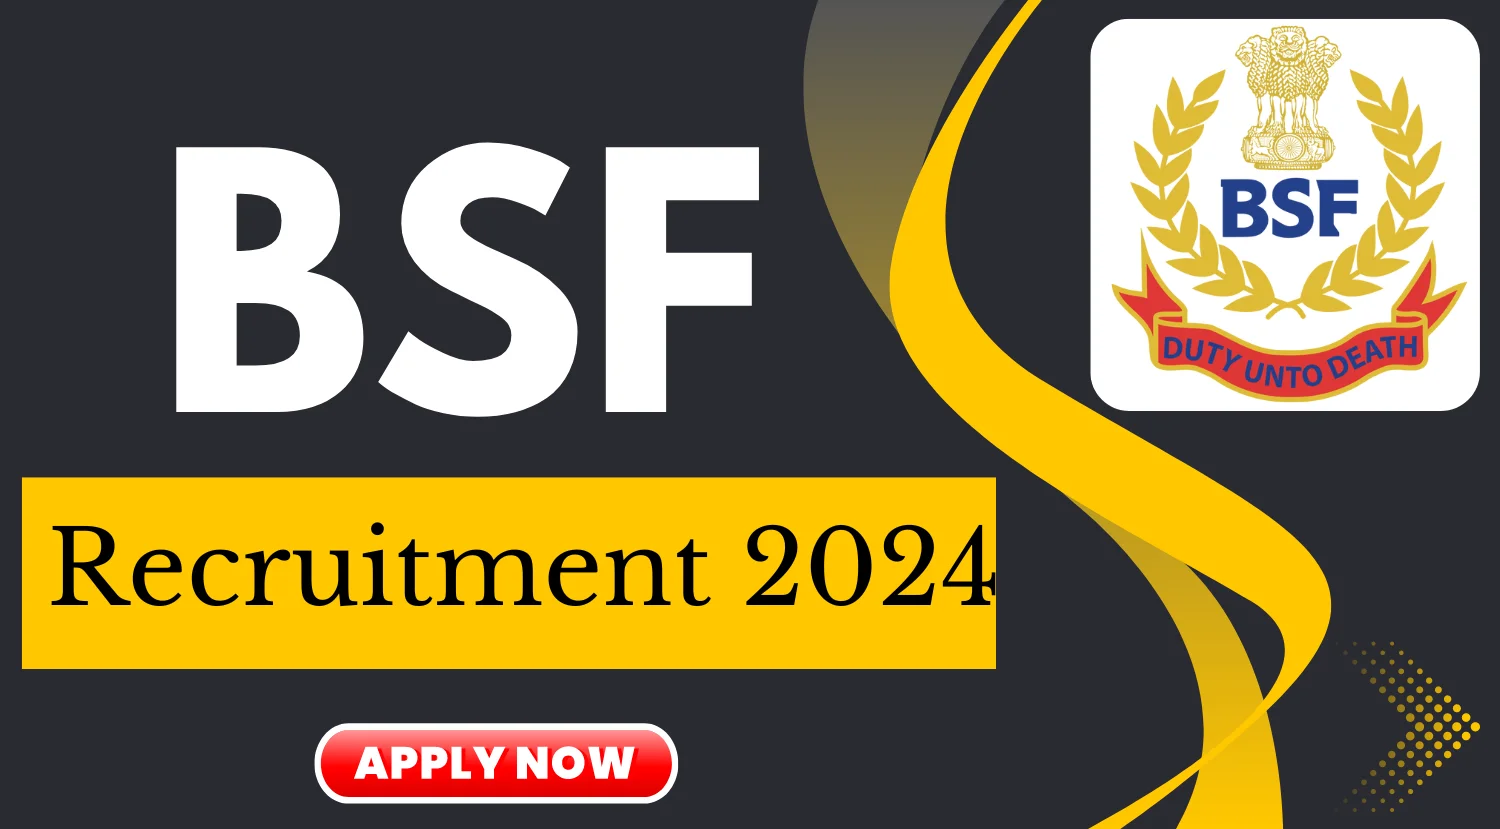 BSF Group A Recruitment 2024